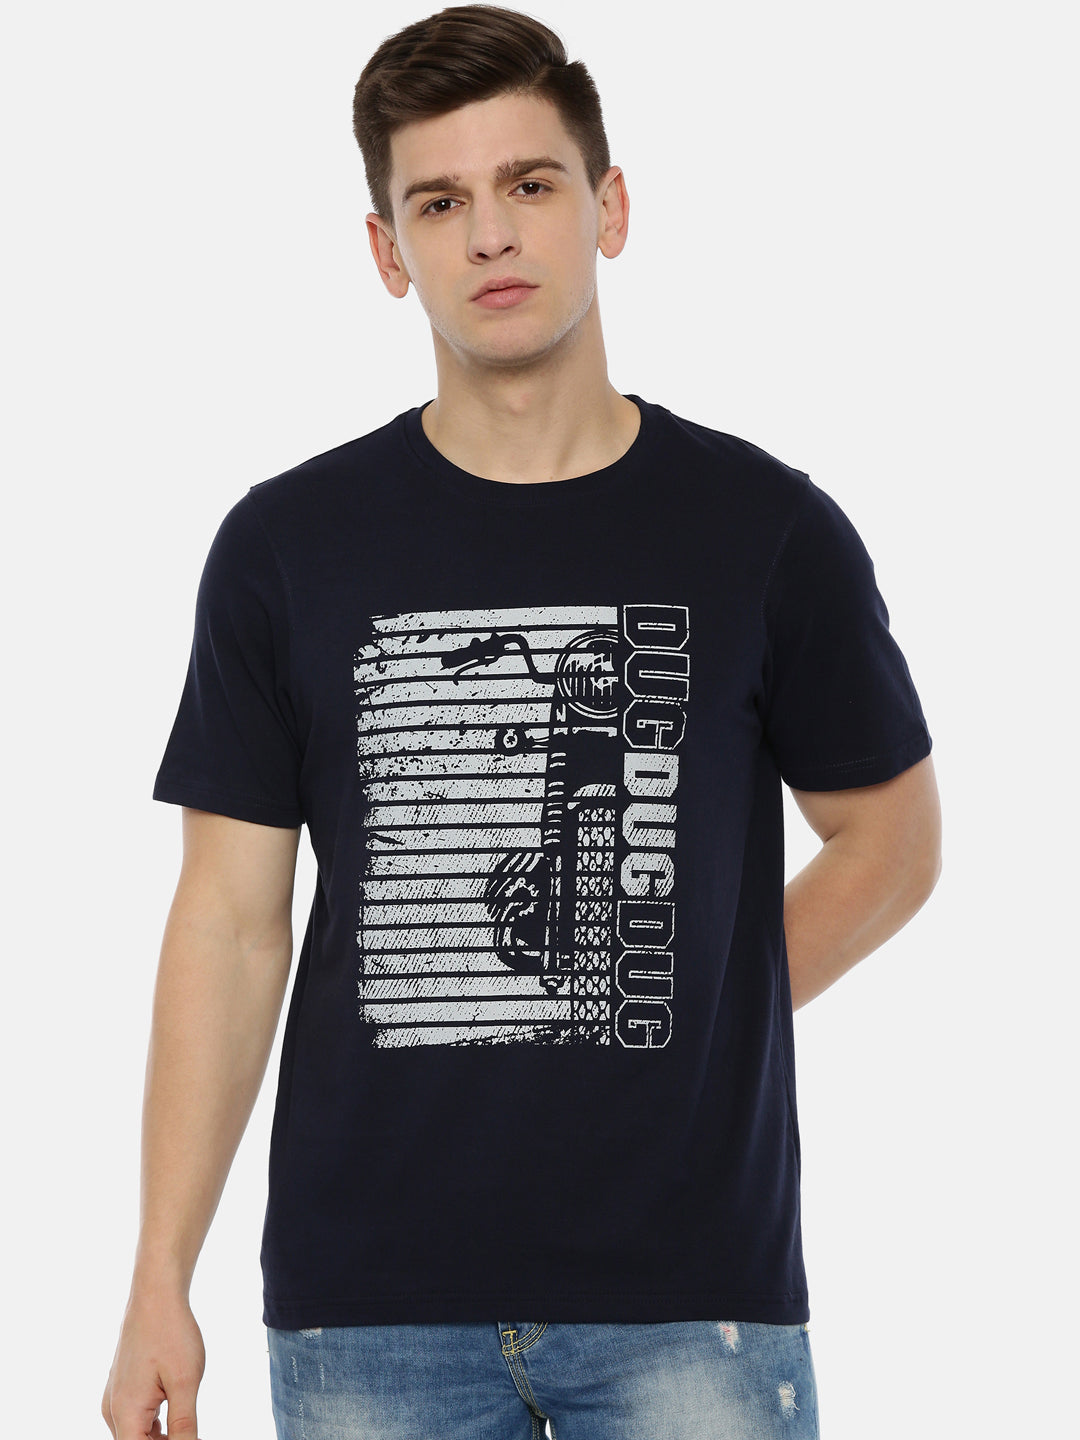 Dug Dug Dug T-Shirt Graphic T-Shirts Bushirt   